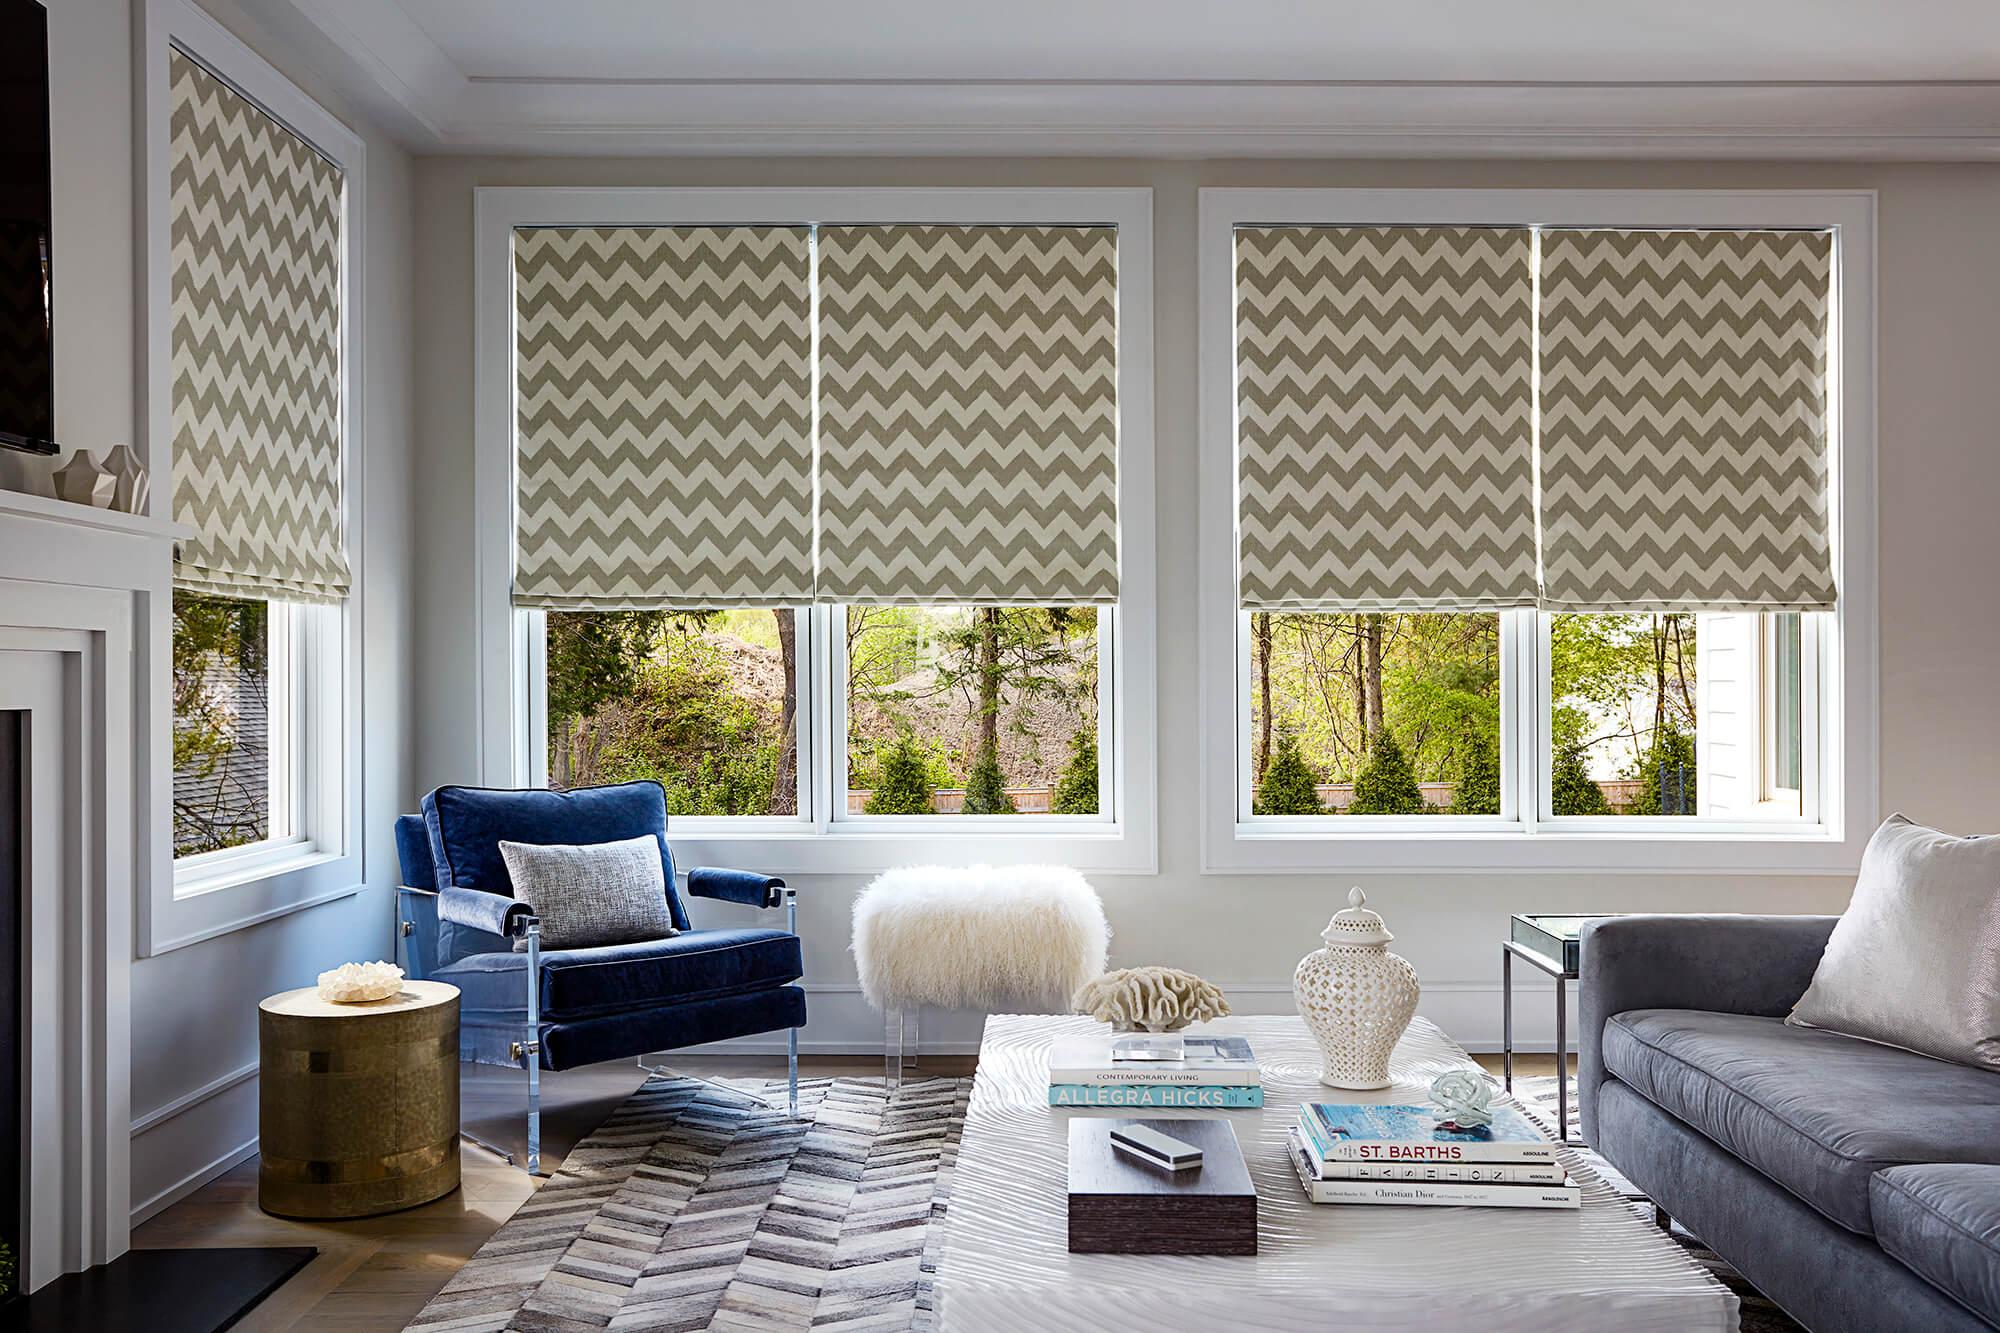 A living room flaunts warm, filtered light through elegant Roman shades.